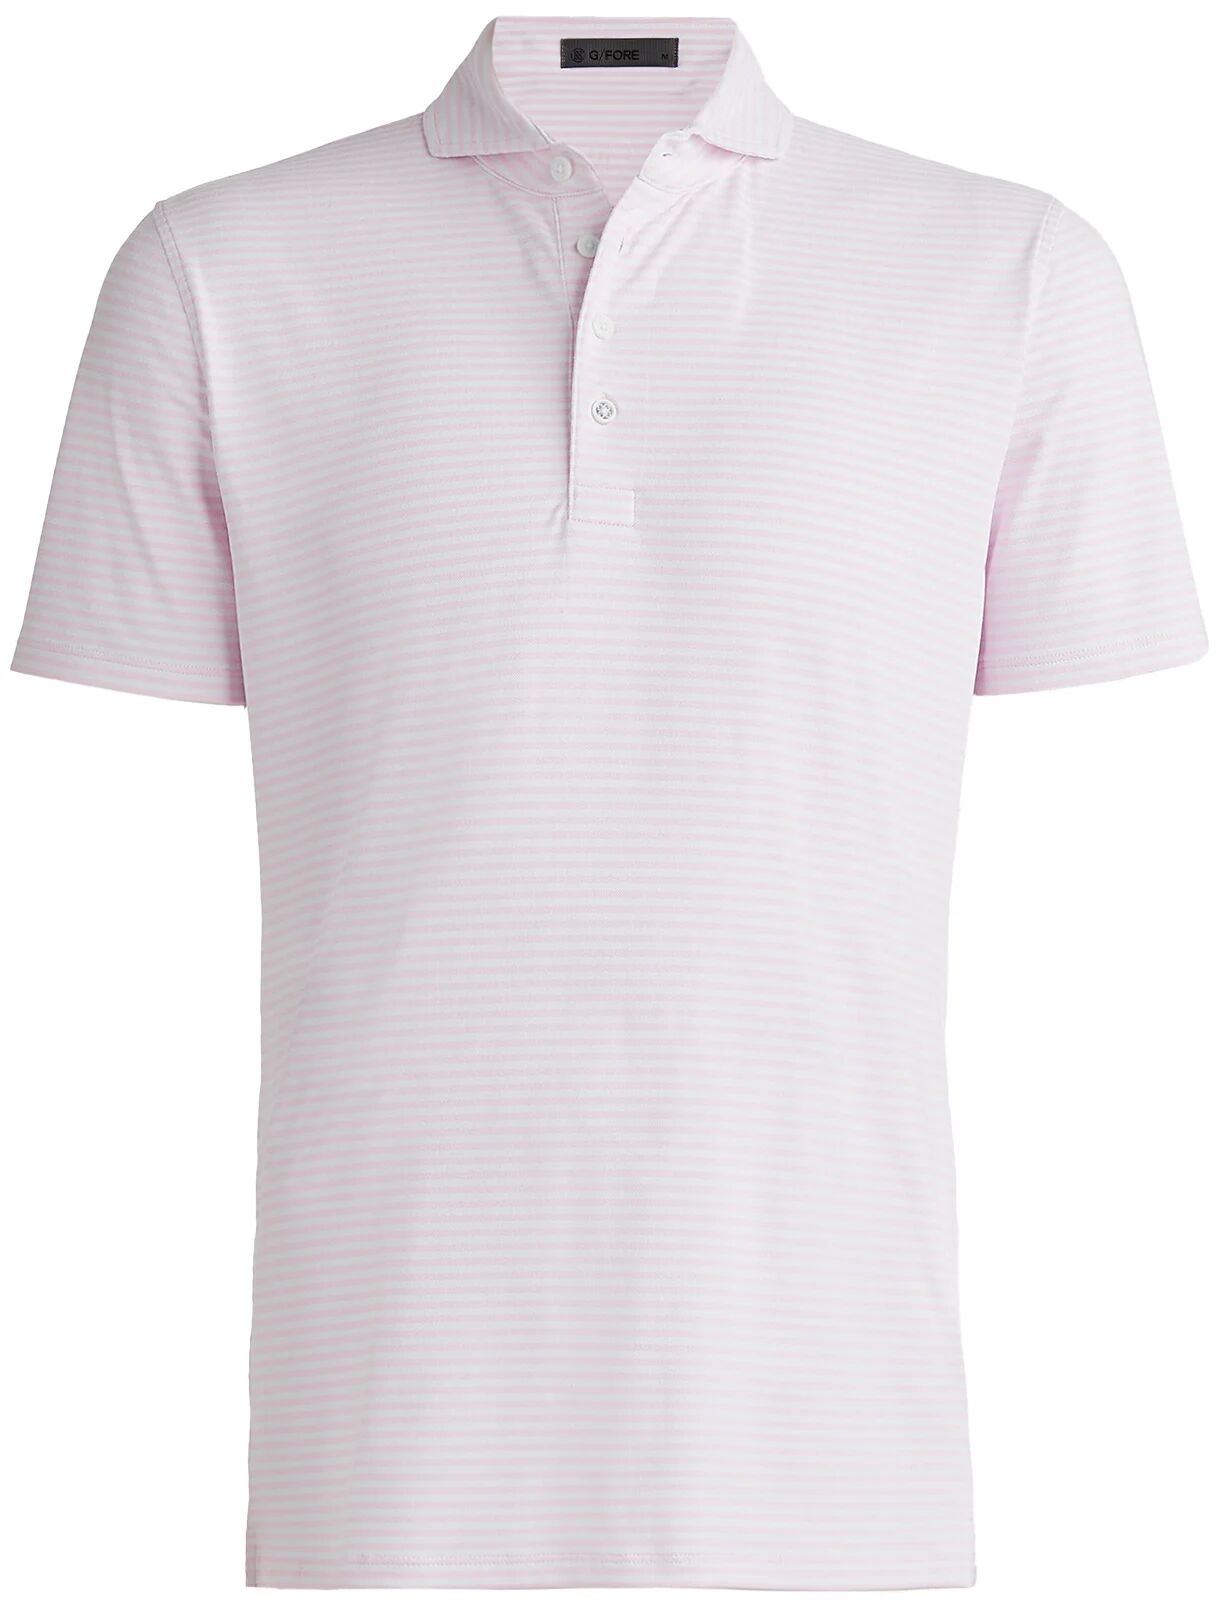 G/FORE Feeder Stripe Tech Pique Modern Spread Collar Men's Golf Polo Shirt - Pink, Size: XXL